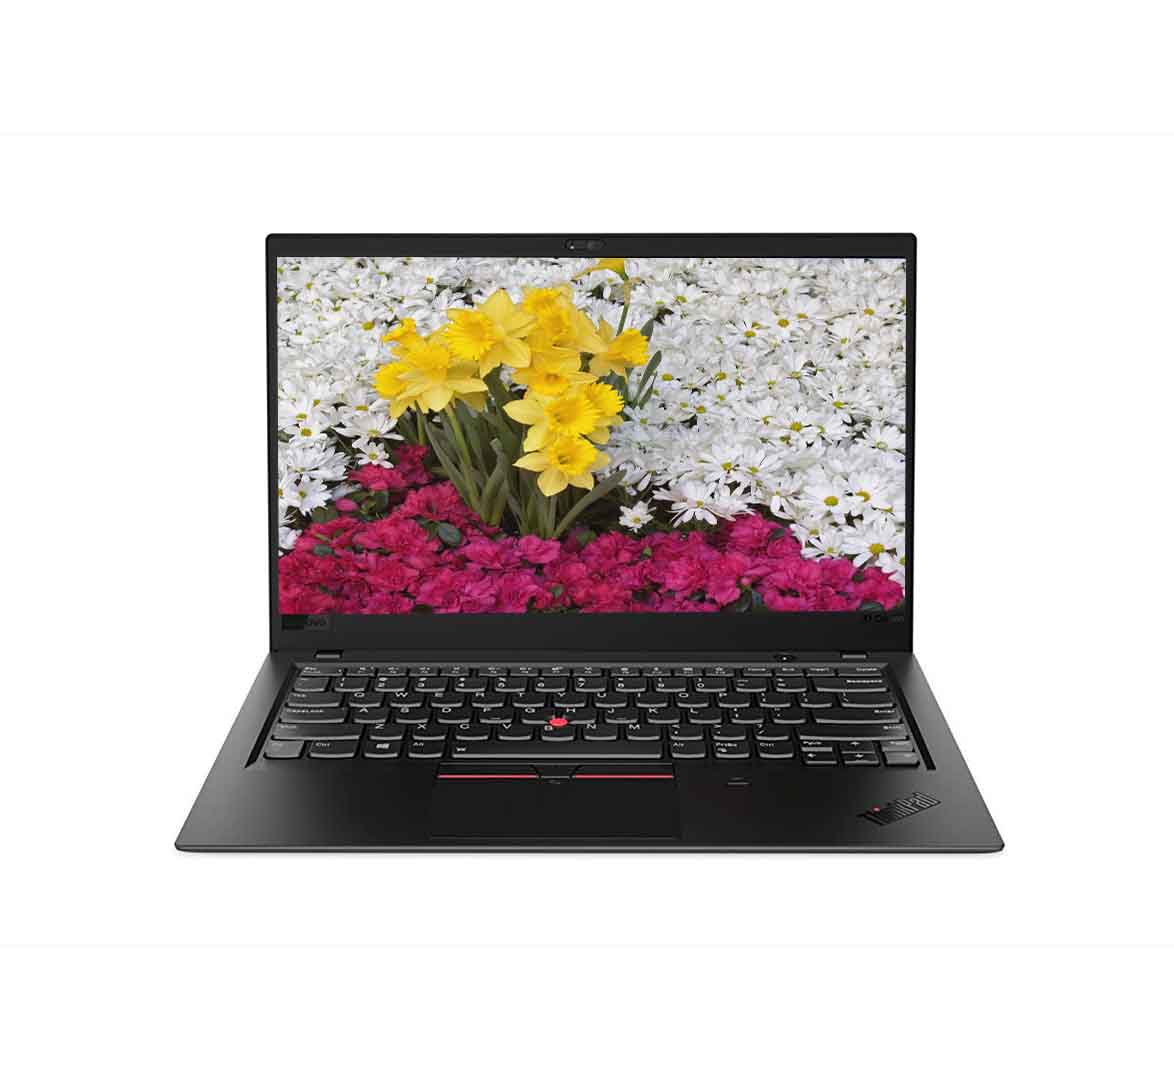 Lenovo ThinkPad x1 Carbon Business Laptop, Intel Core i7-3rd Gen CPU, 4GB RAM, 128GB SSD, 14 inch Display, Windows 10 Pro, Refurbished Laptop